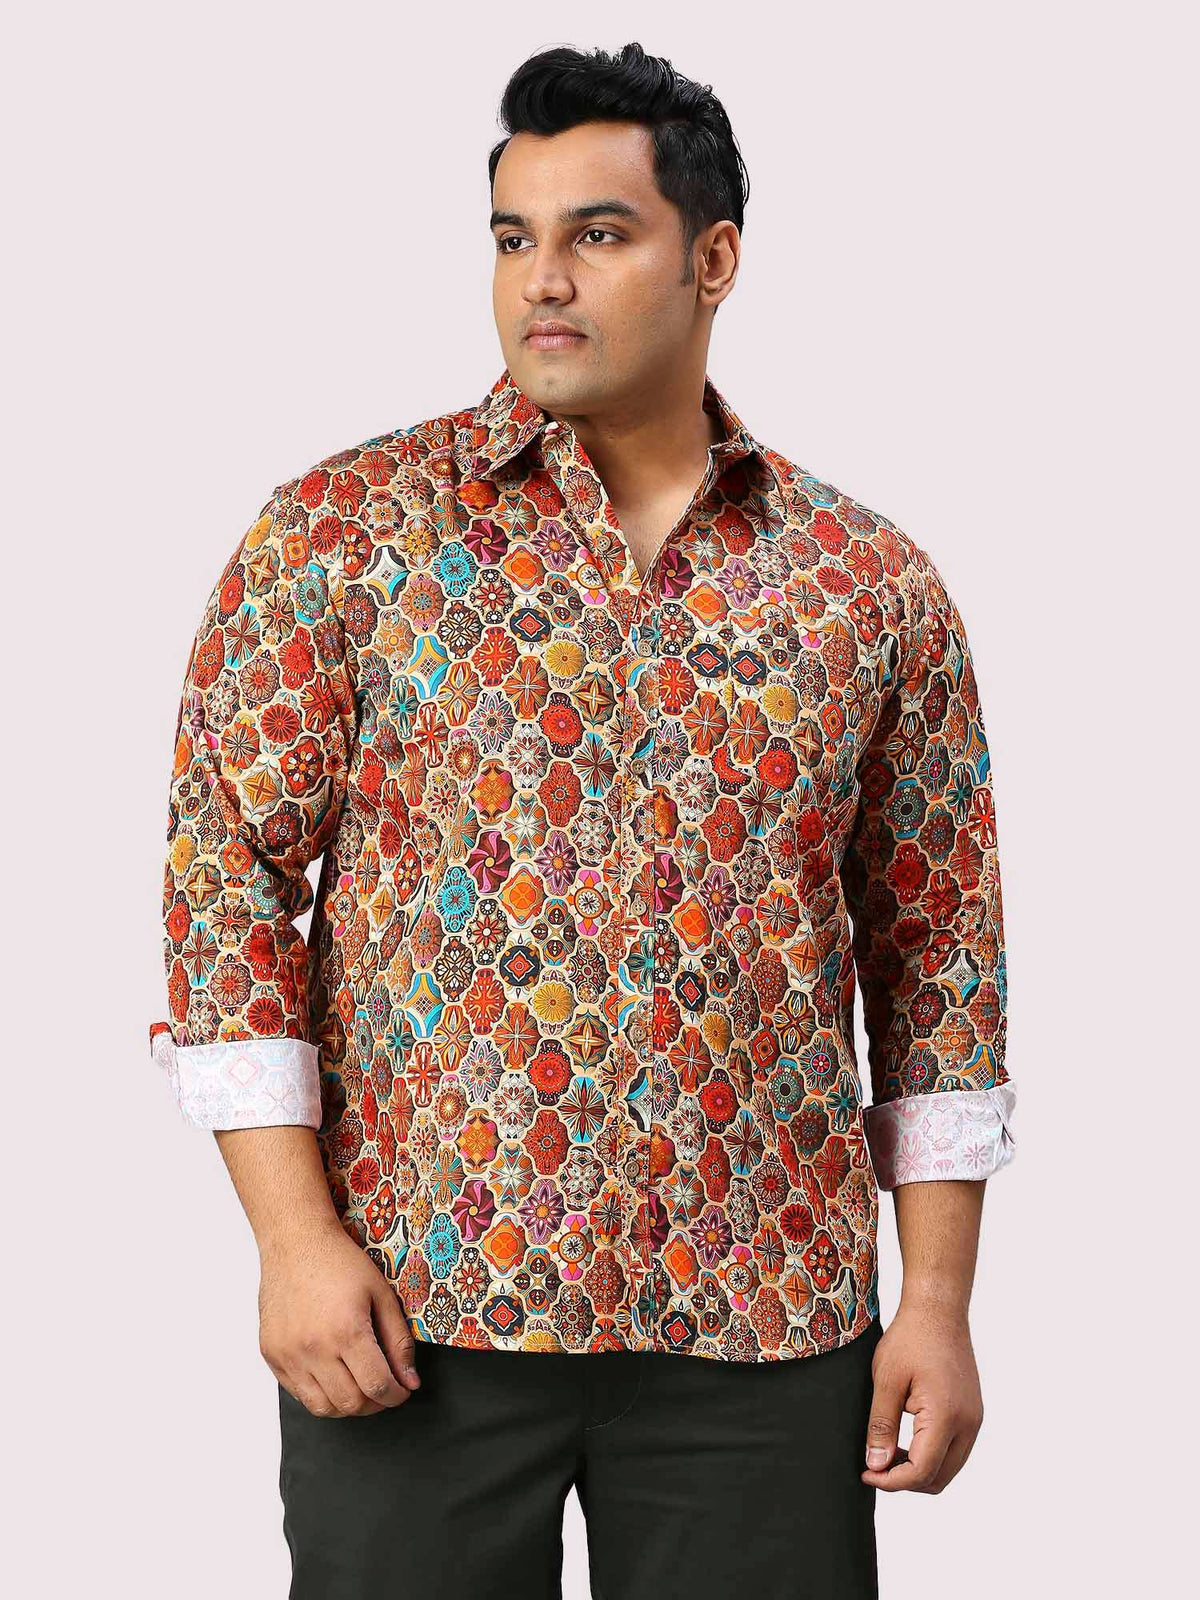 Tangerine Blocks Digital Printed Full Sleeve Men's Plus Size Shirt - Guniaa Fashions